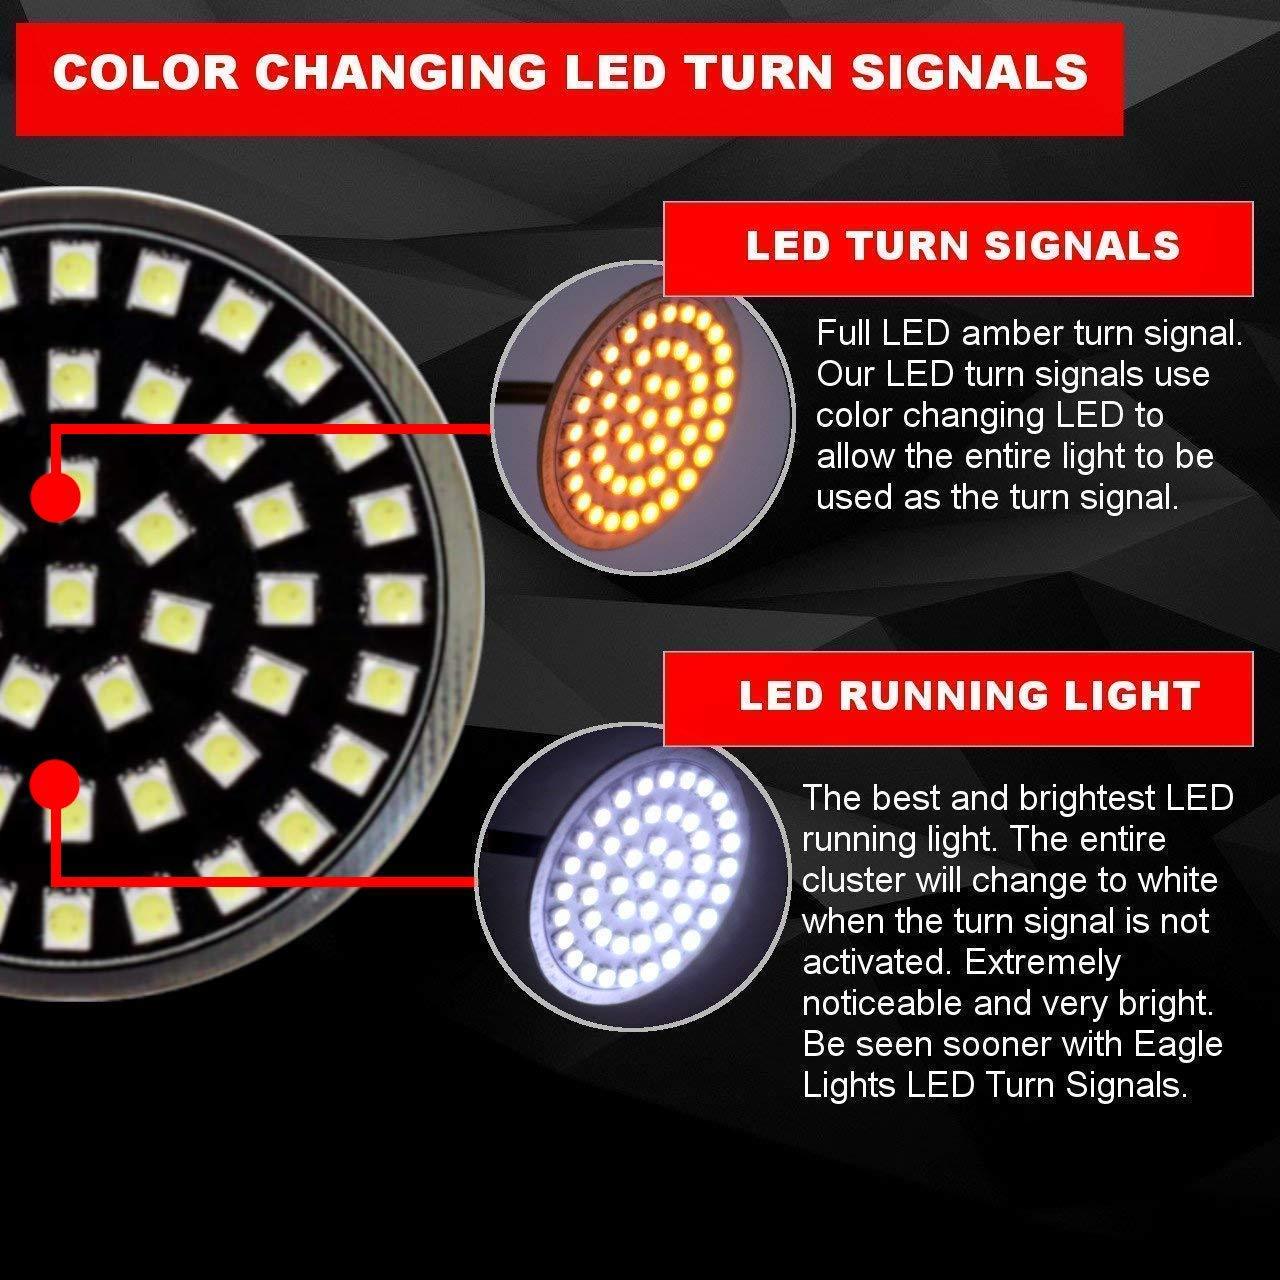 2” LED Turn Signal Kits - Eagle Lights Generation II Midnight Edition Turn Signals (Front (1157) And Rear (1157) LED Turn Signal Kit)